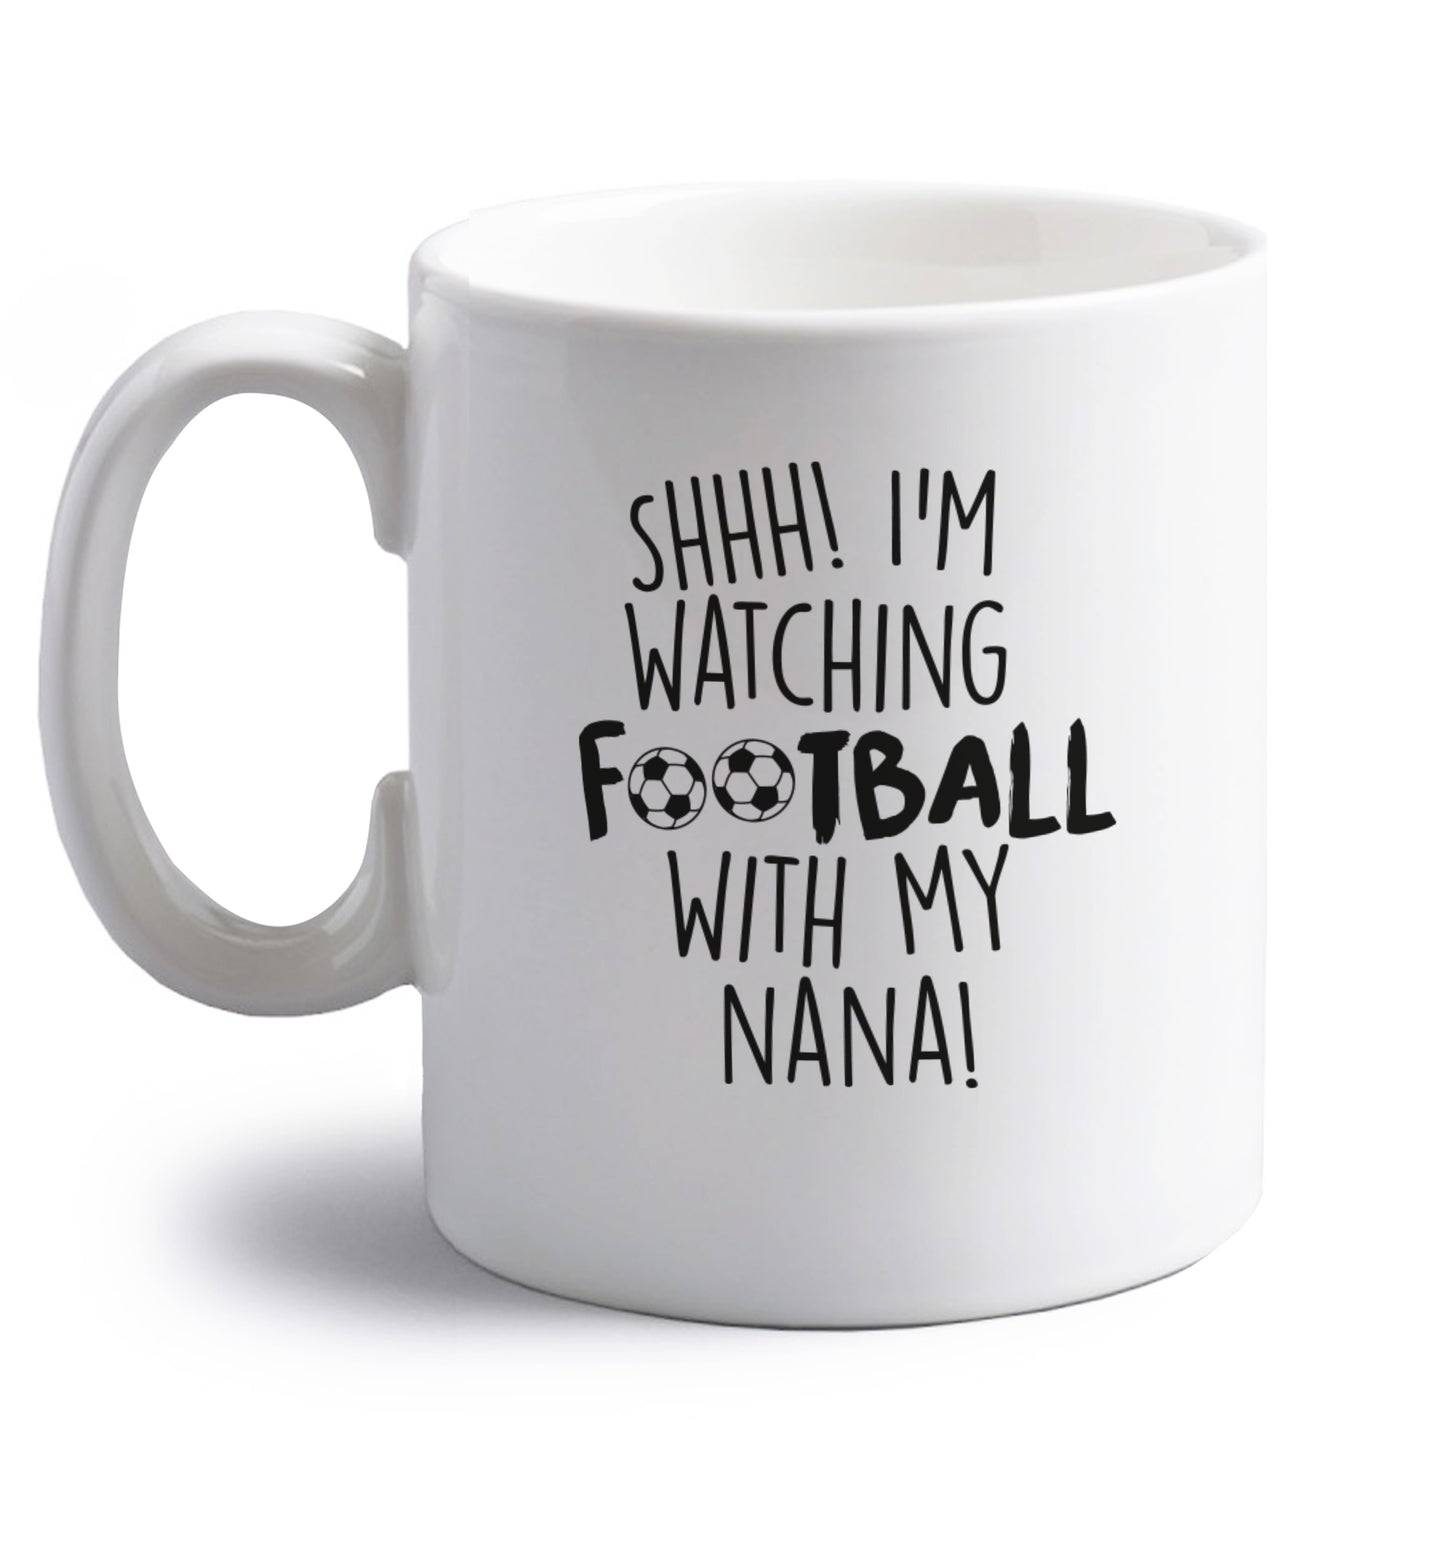 Shhh I'm watching football with my nana right handed white ceramic mug 